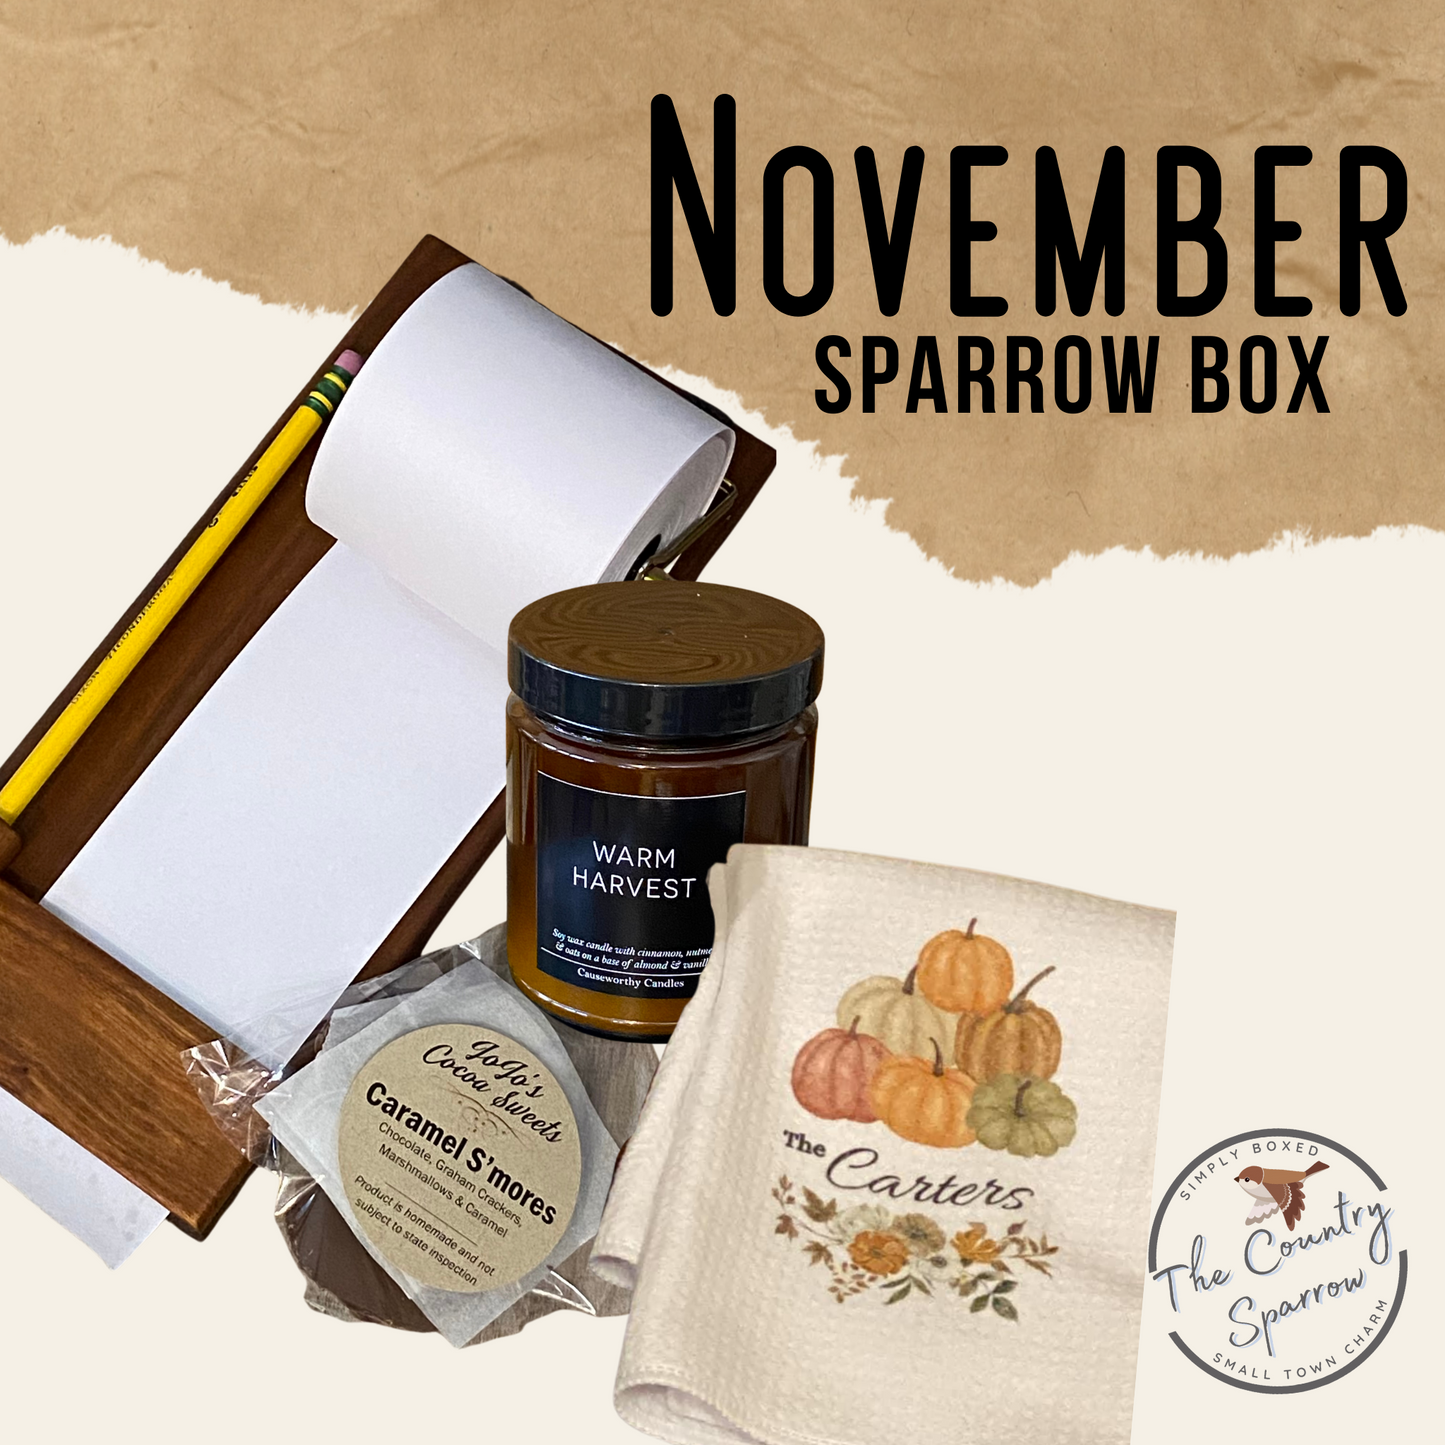 Taking Note November Sparrow Box